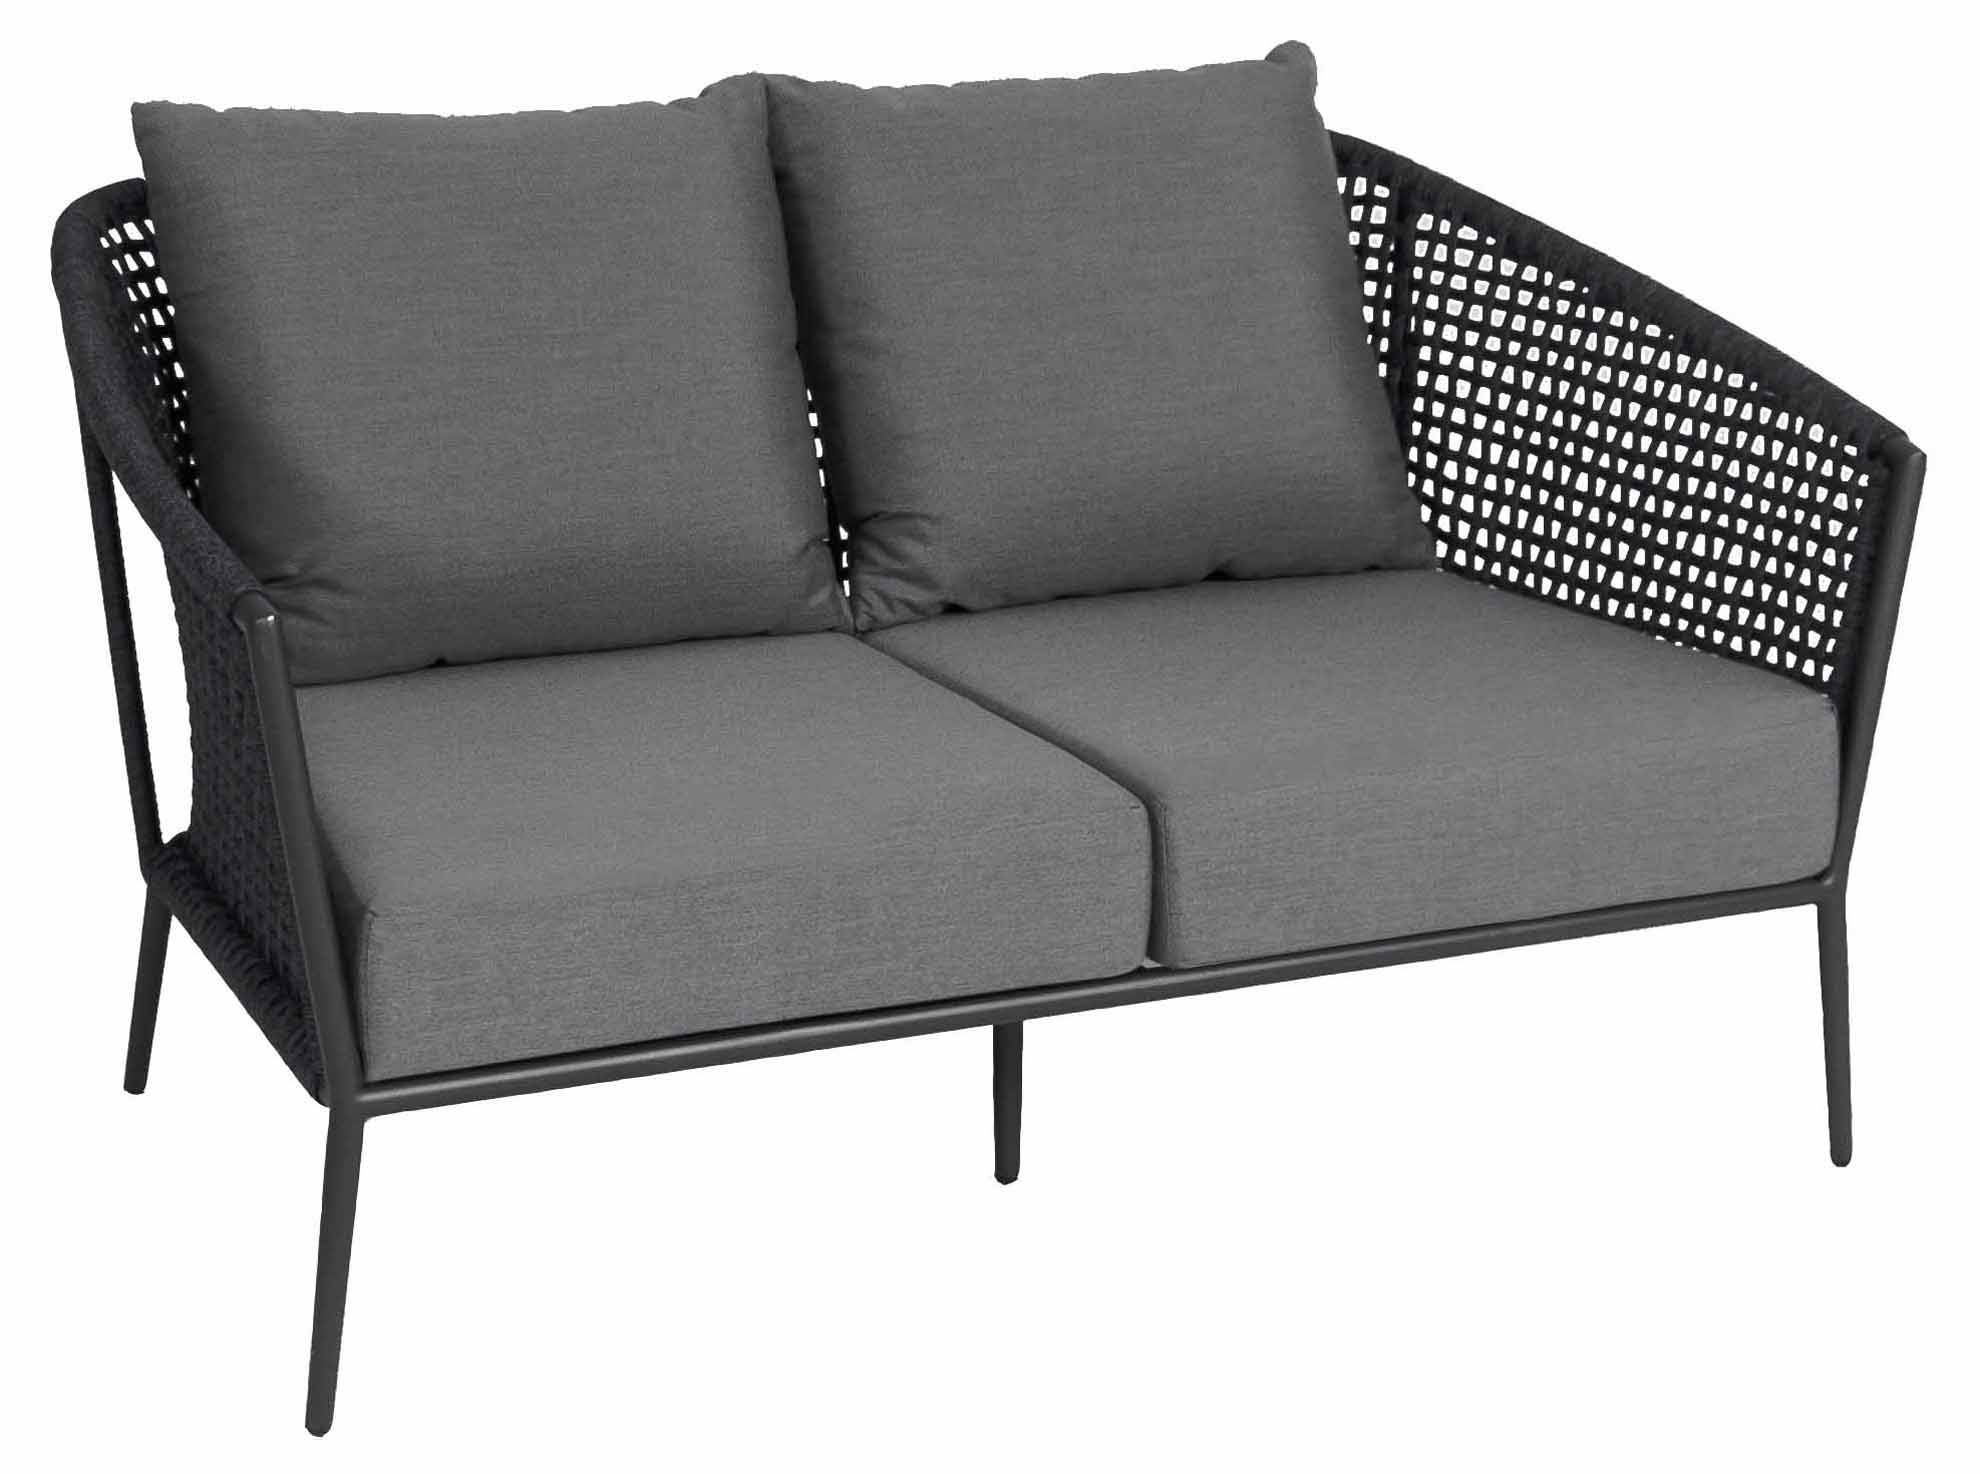 Jati & Safara 2-Sitzer eisengrau/schwarz Sofa, cast Kissen Lounge weaving), slate Kebon (open